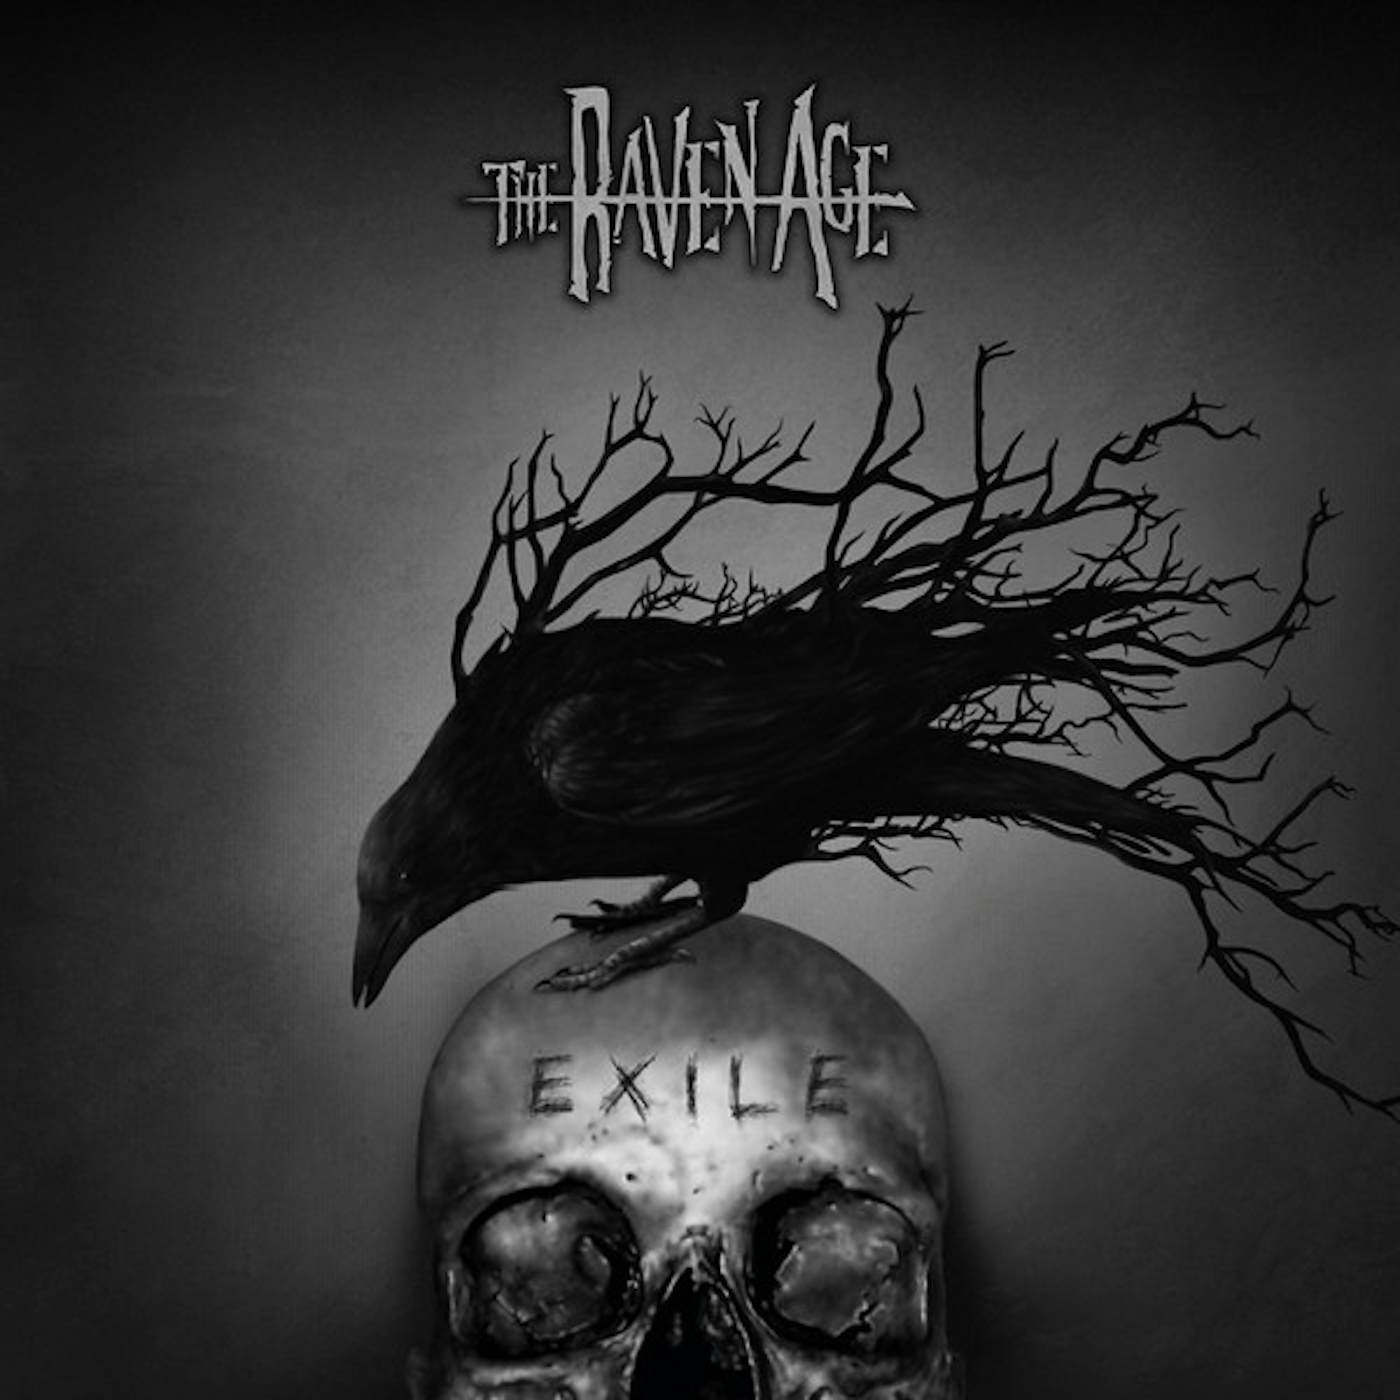 The Raven Age Exile Vinyl Record